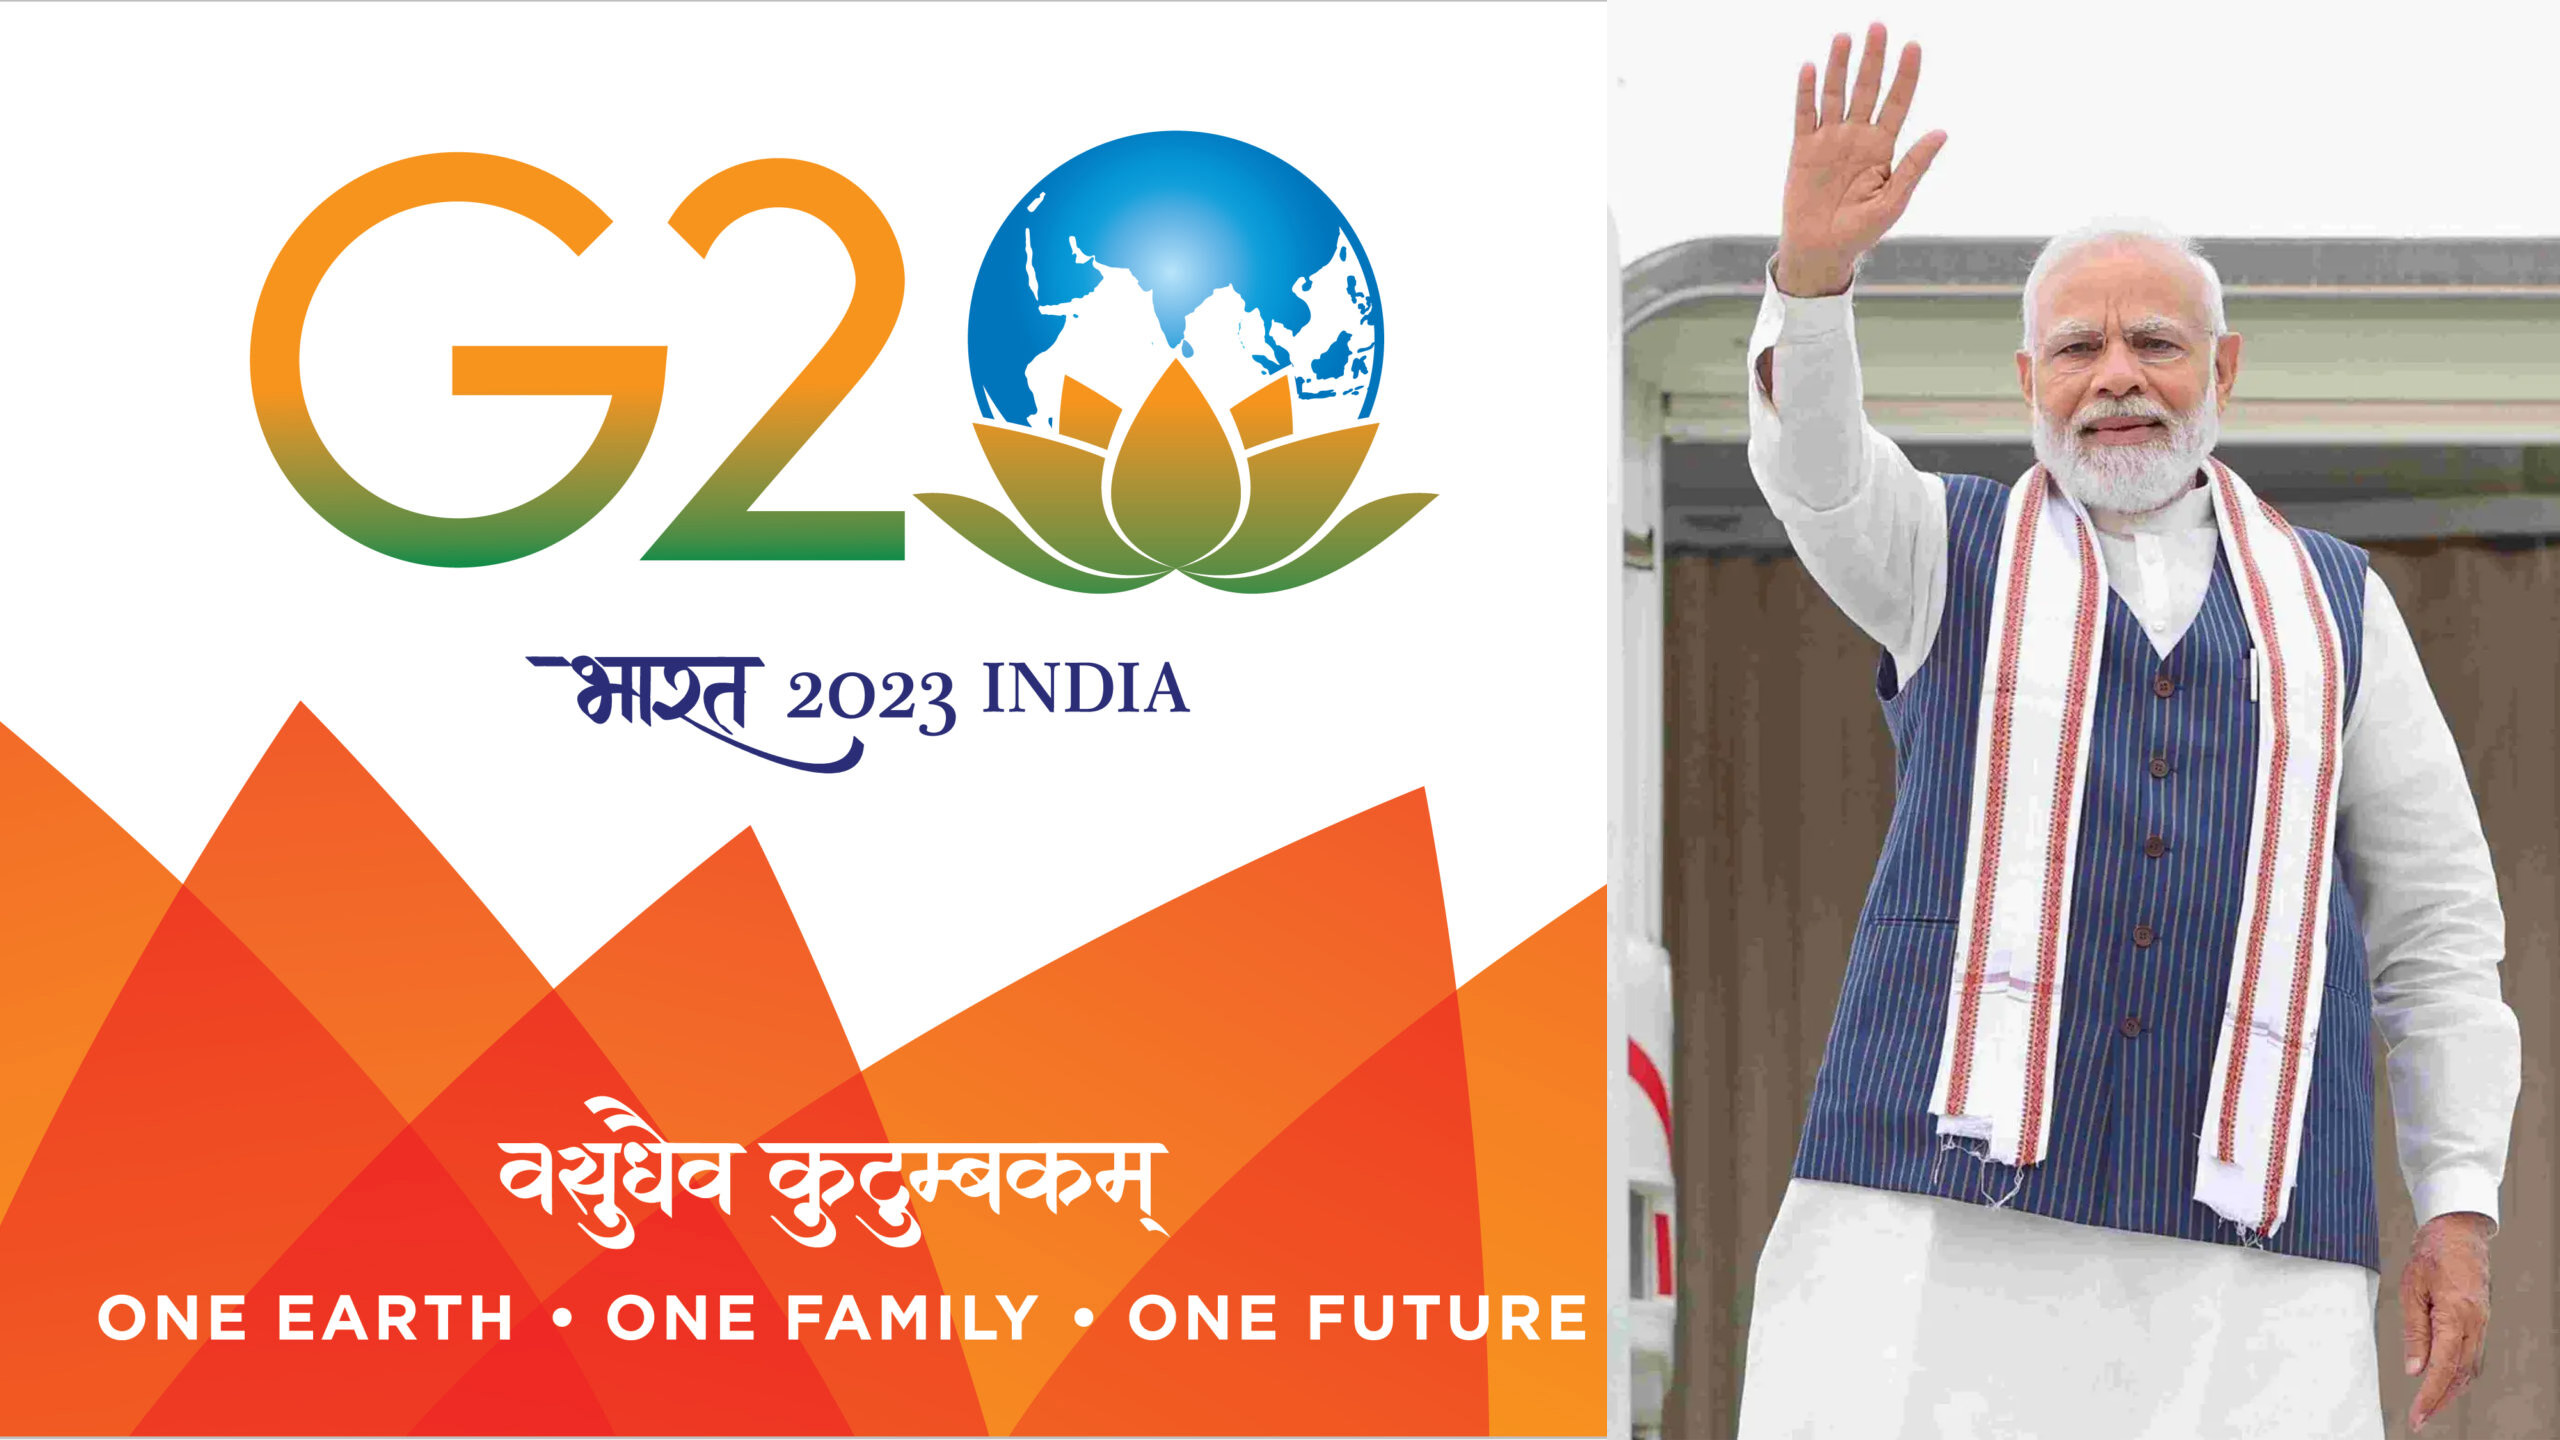 PM Modi lauds India's G20 leadership ahead of summit meeting in New Delhi